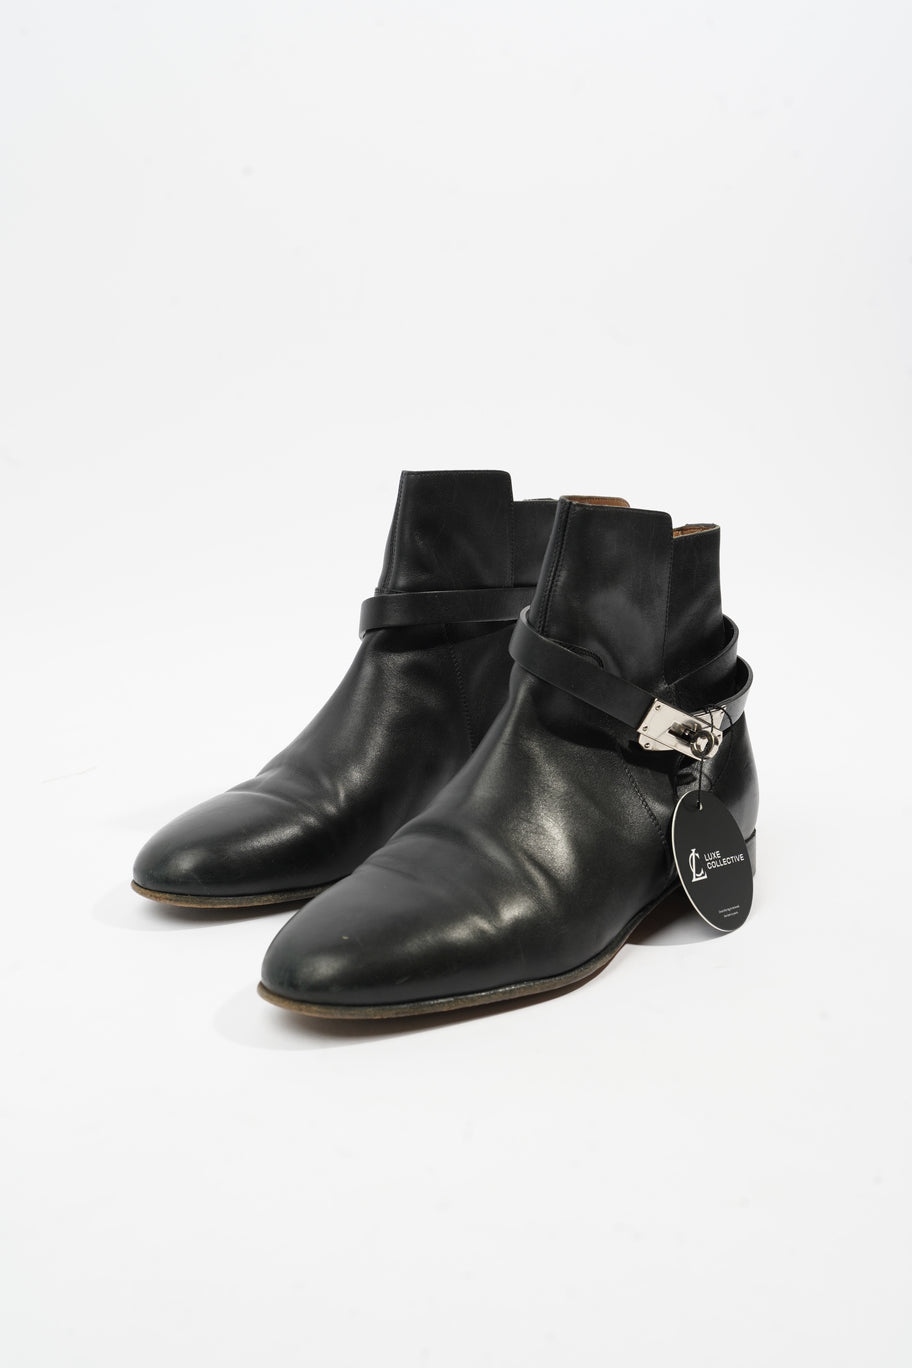 Neo Ankle Boot Black Leather EU 41 UK 8 Image 12